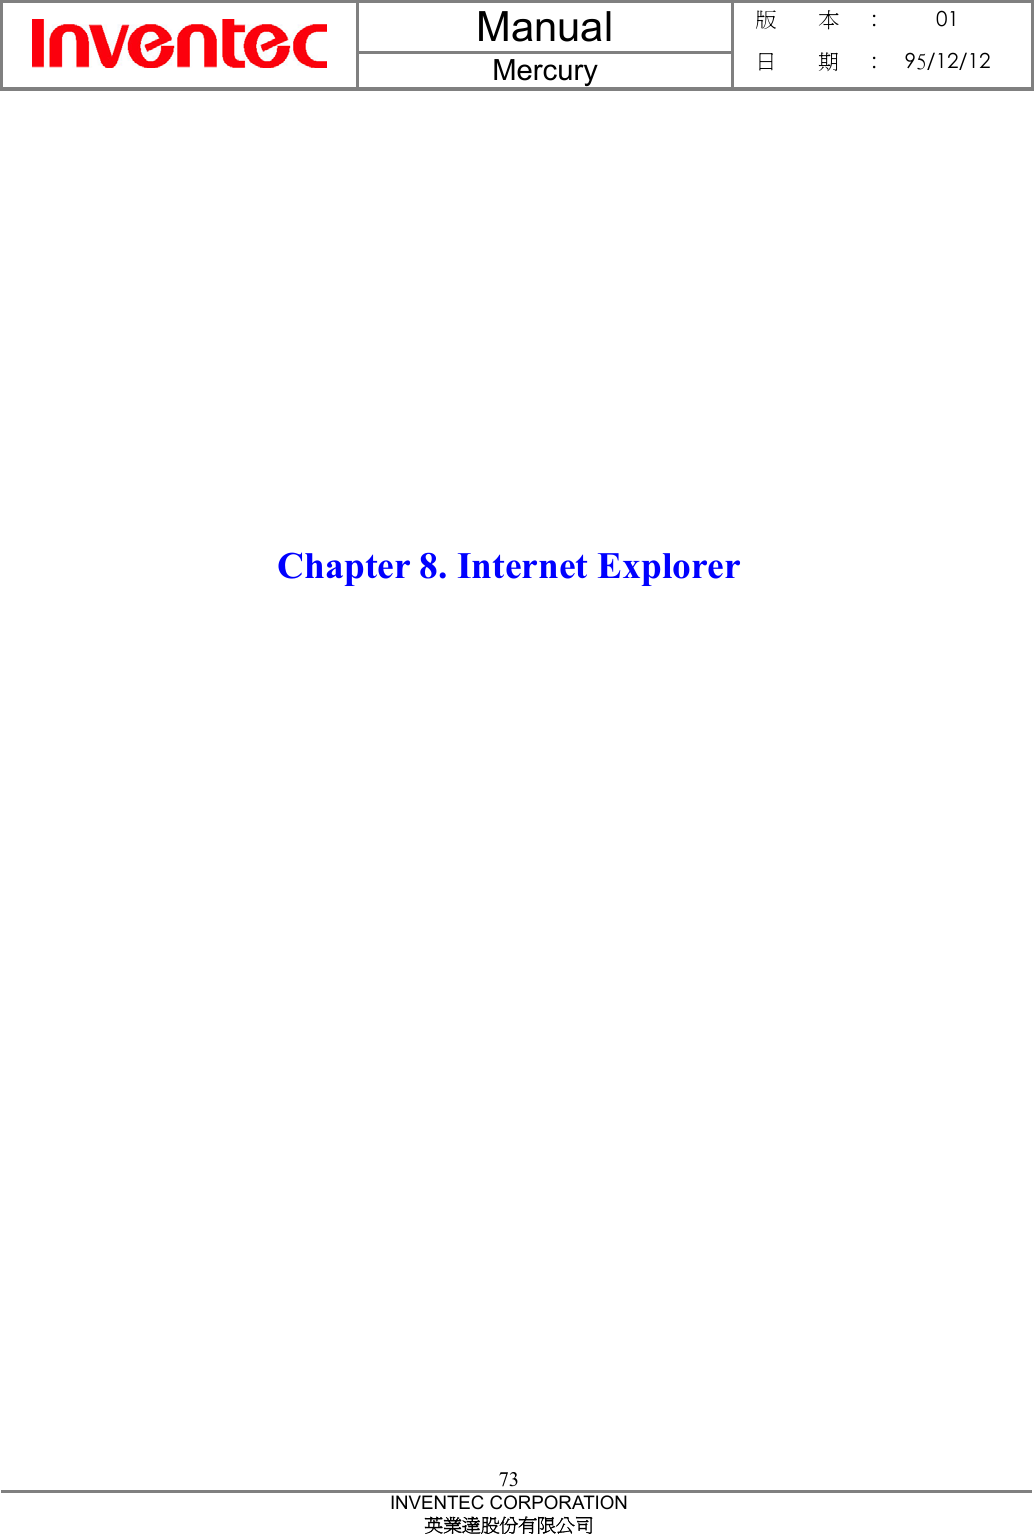 Manual  Mercury 版    本 :  01 日    期 : 95/12/12  73 INVENTEC CORPORATION 英業達股份有限公司             Chapter 8. Internet Explorer 